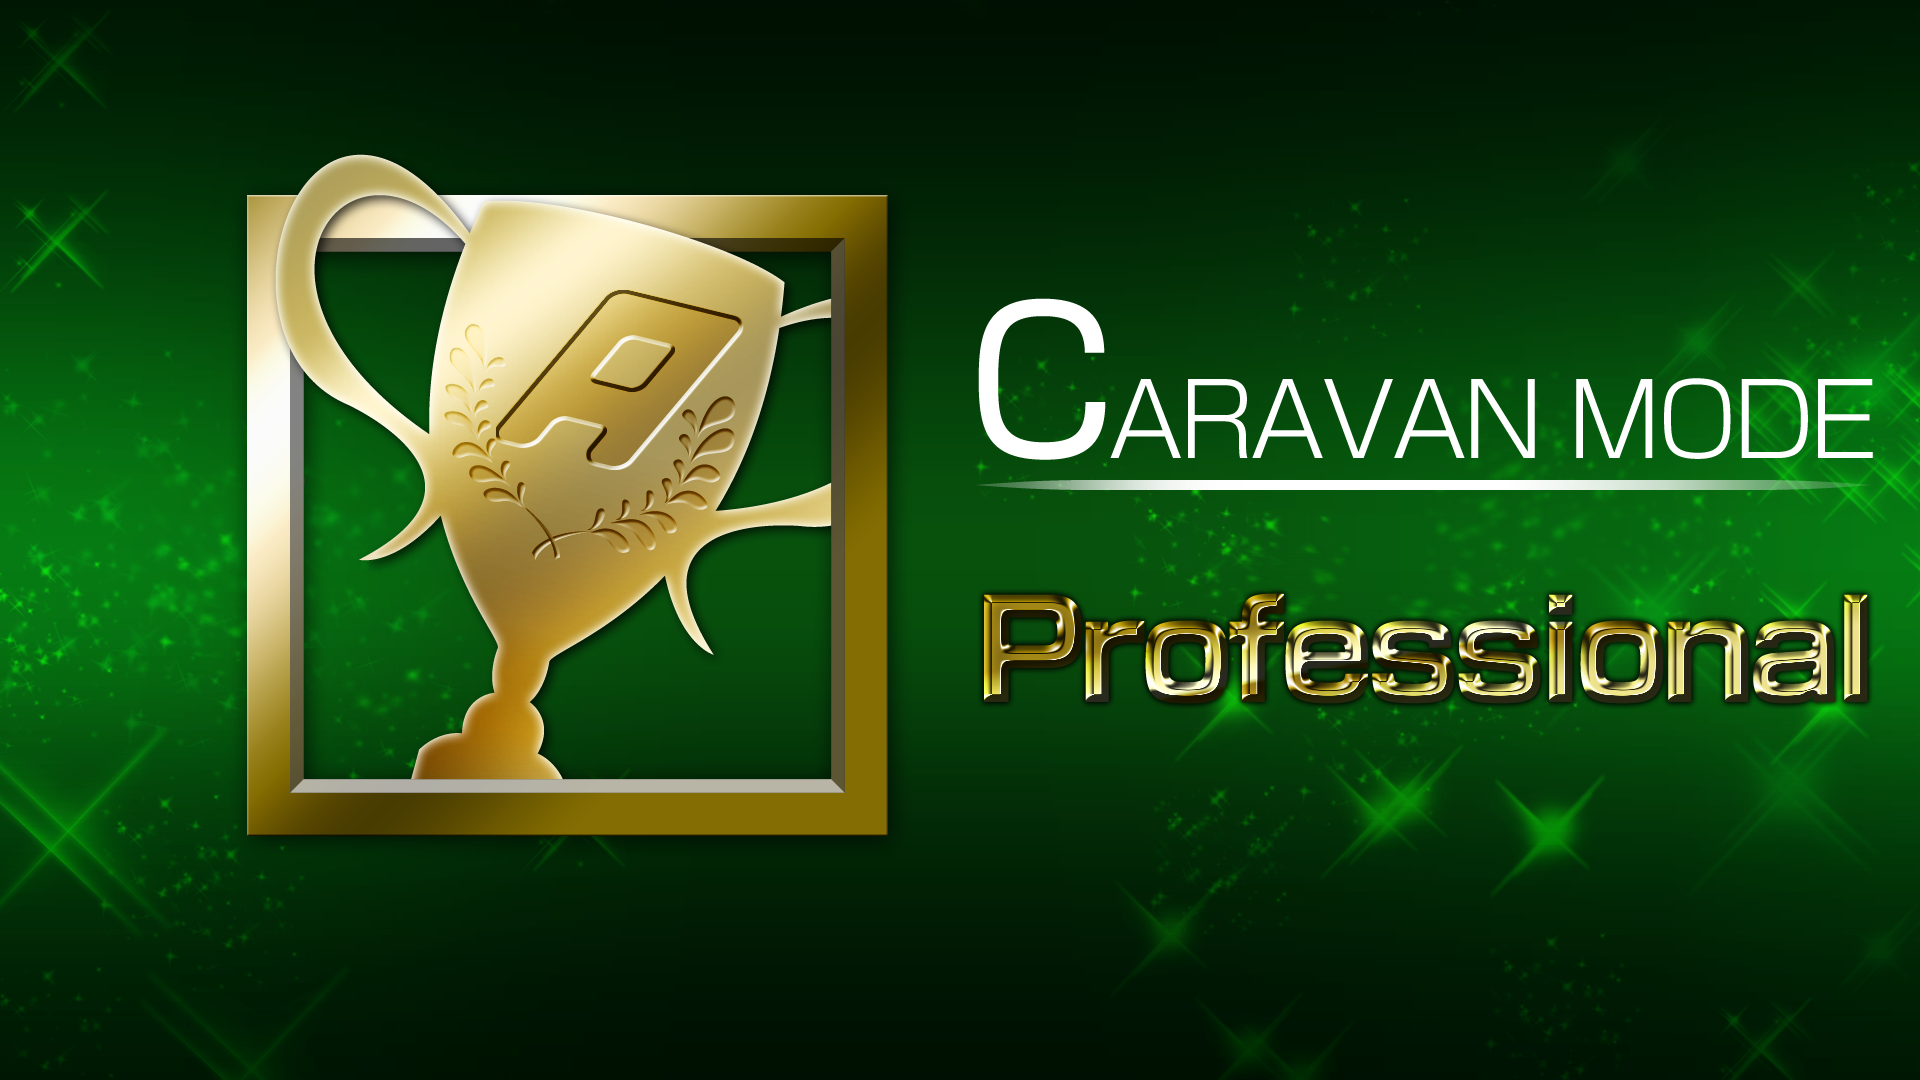 Icon for CARAVAN MODE 5 points